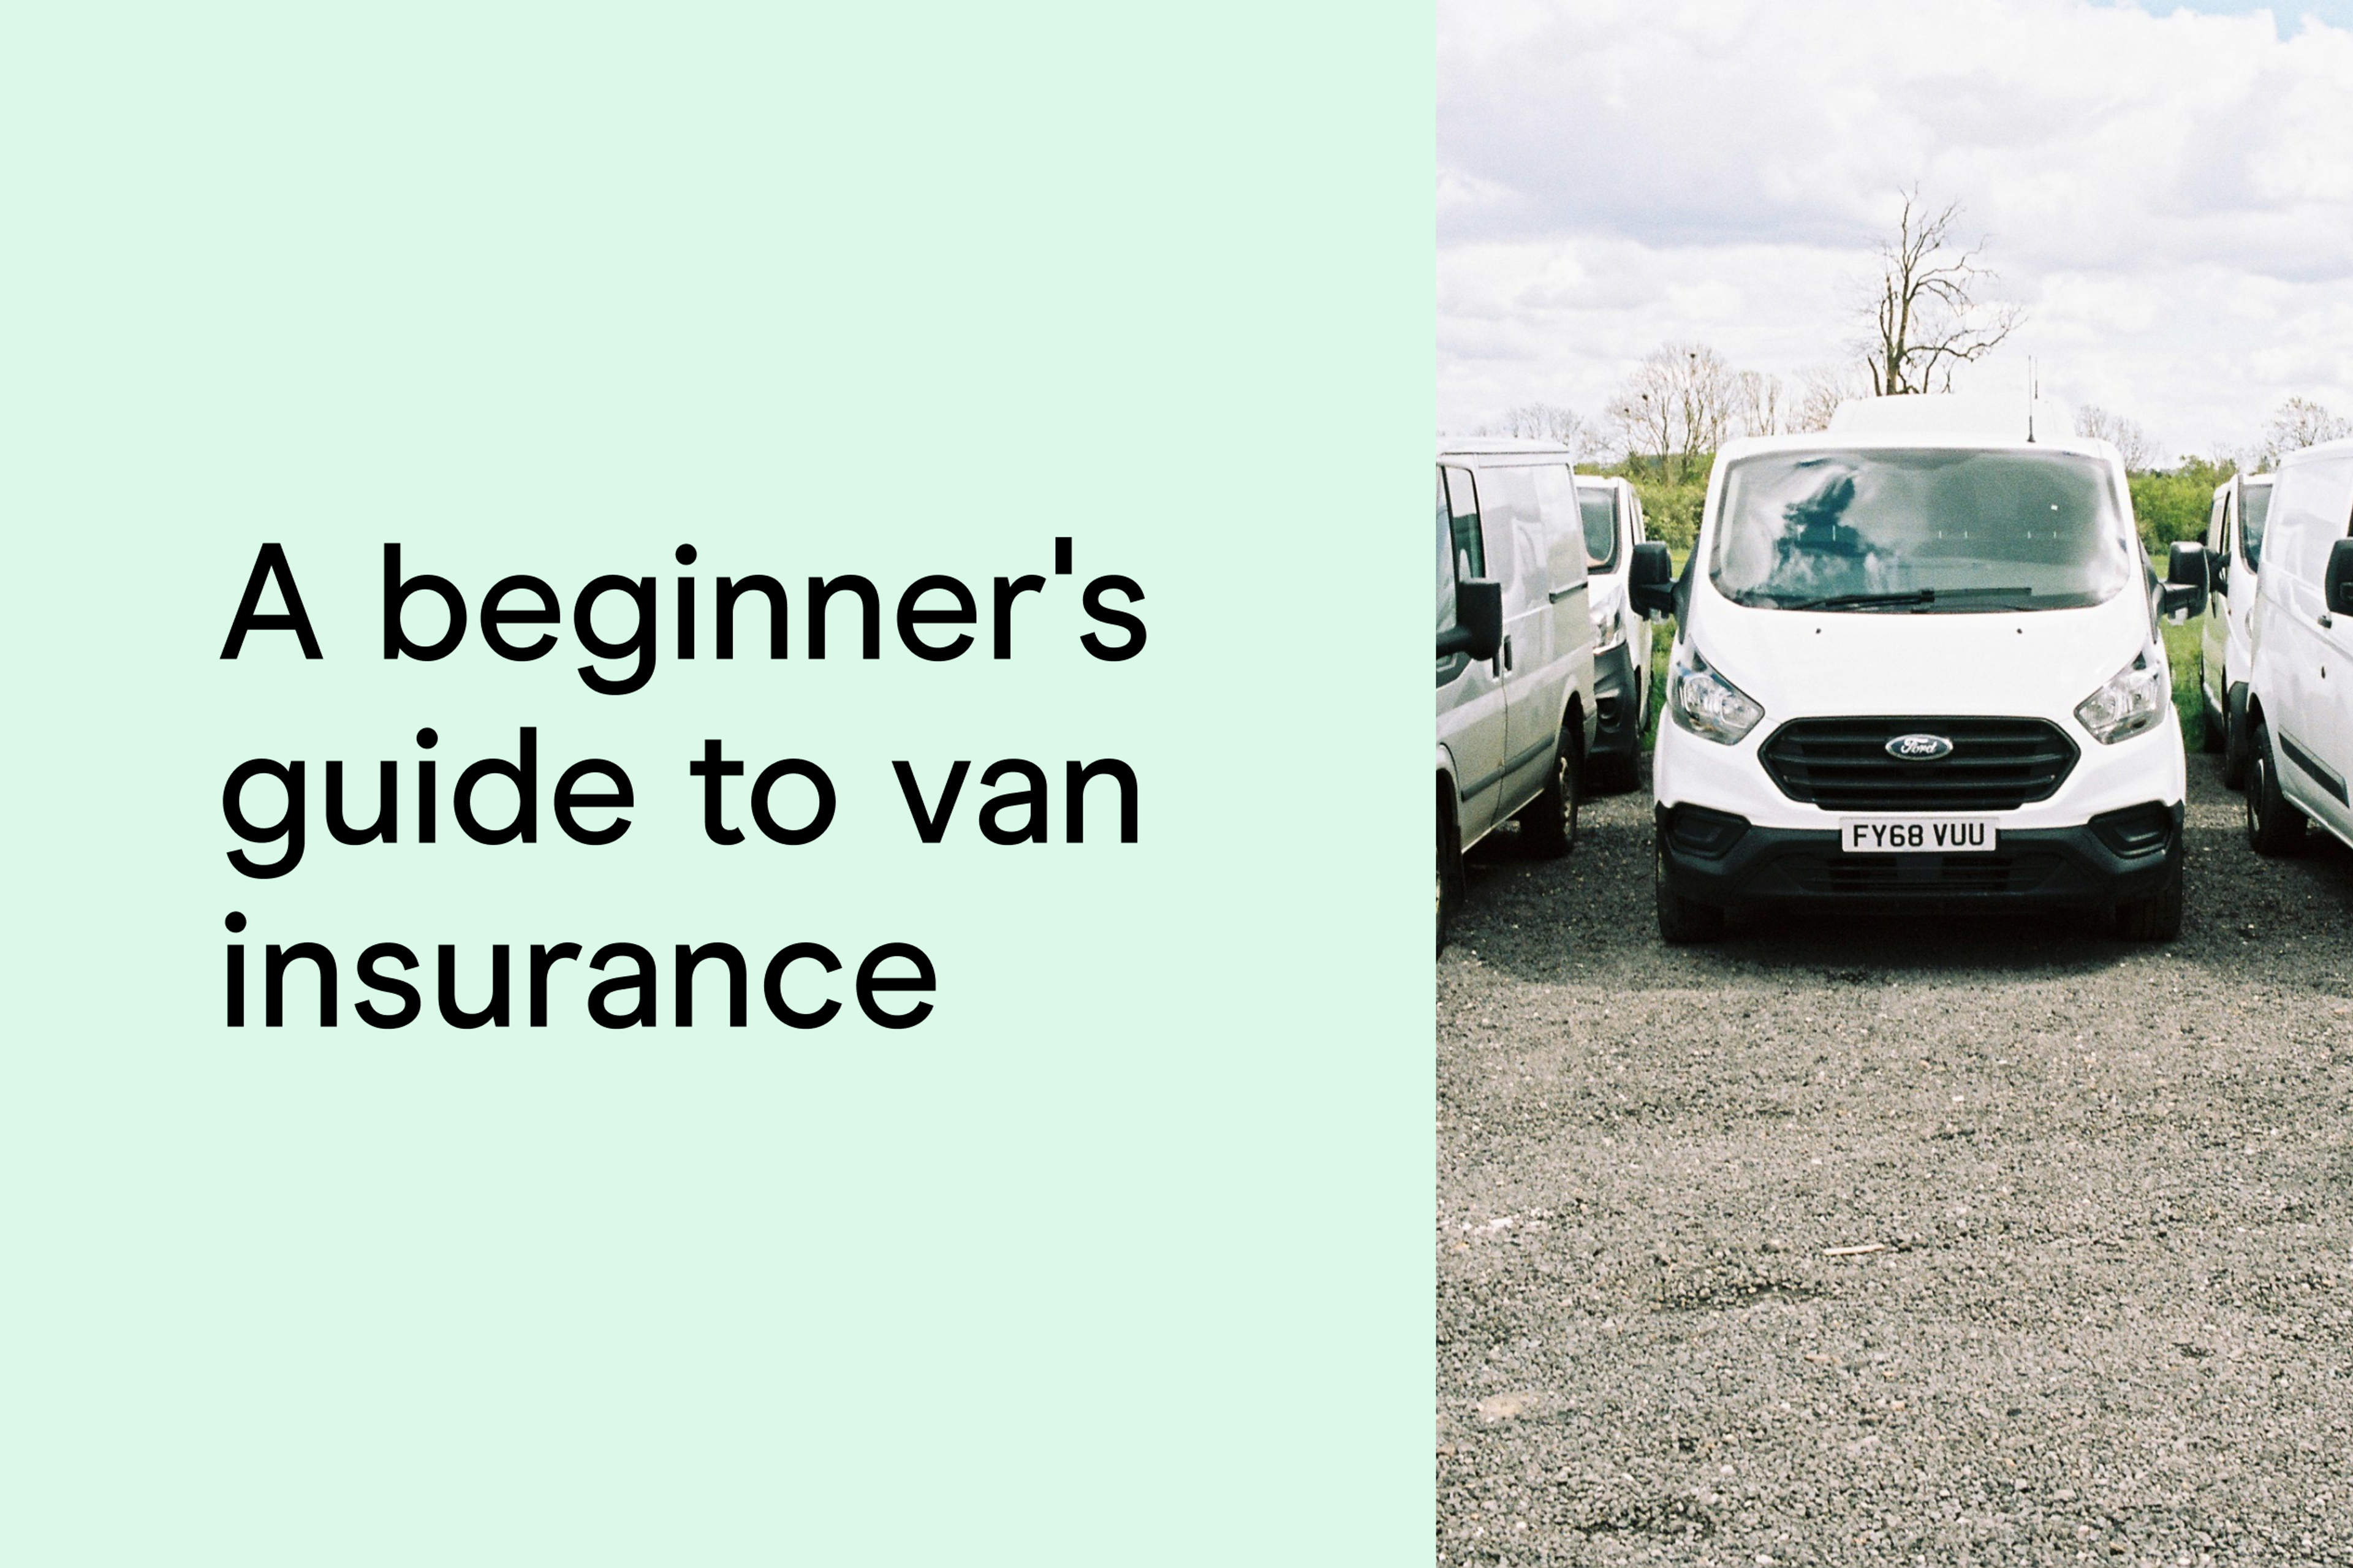 A beginner's guide to van insurance